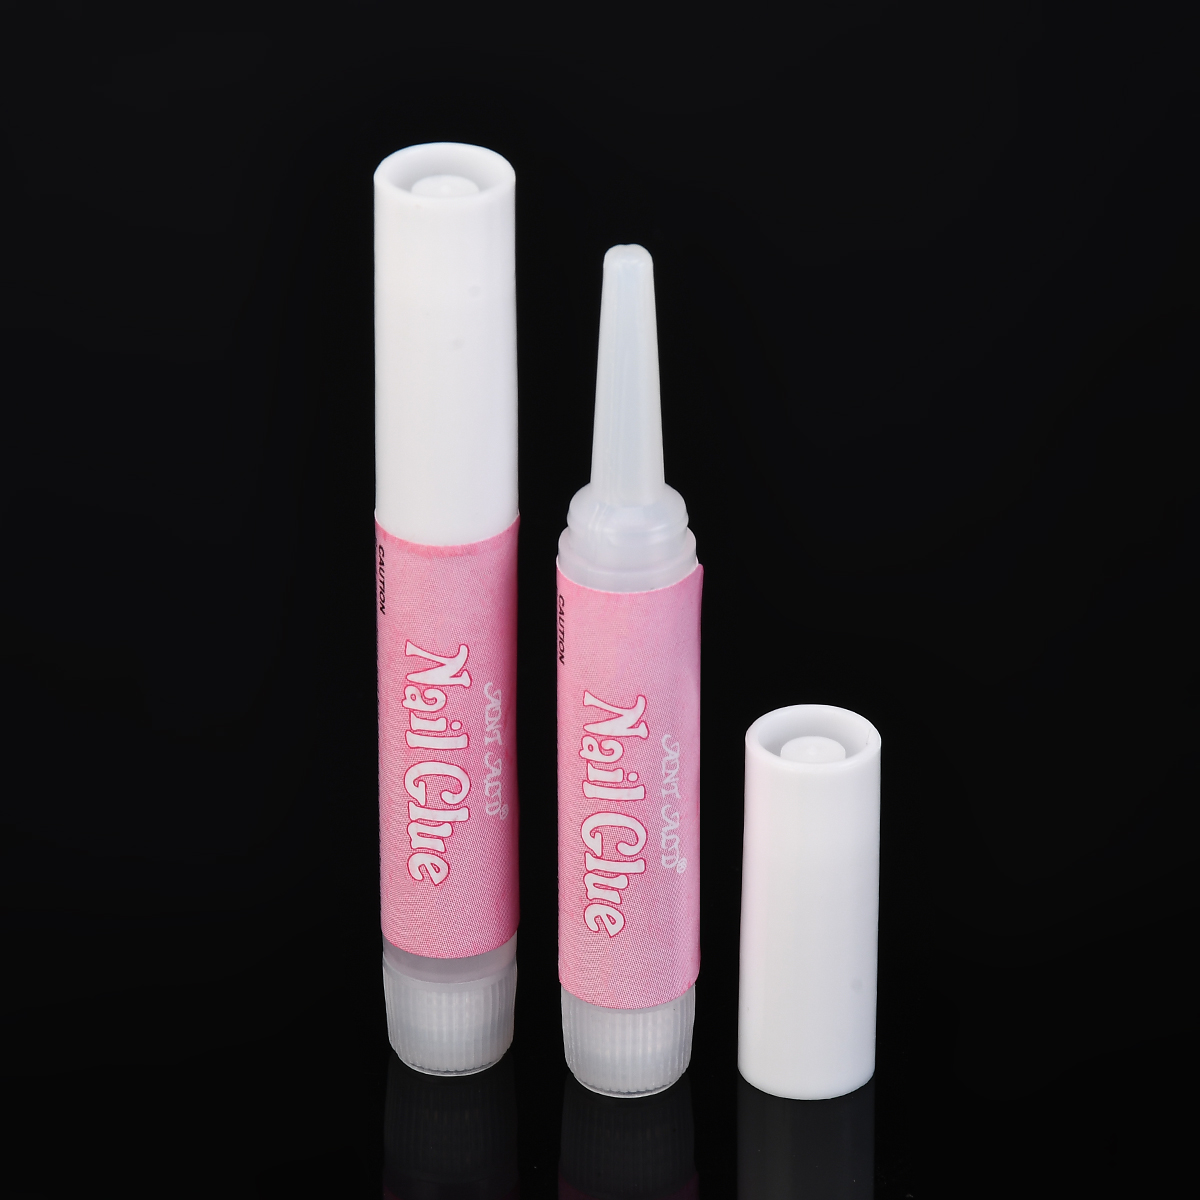 10Pcs Nail Glue 2-3g Strong Adhesive for Nail Art Tips Acrylic False Rhinestone Accessories Manicure Tool Glue